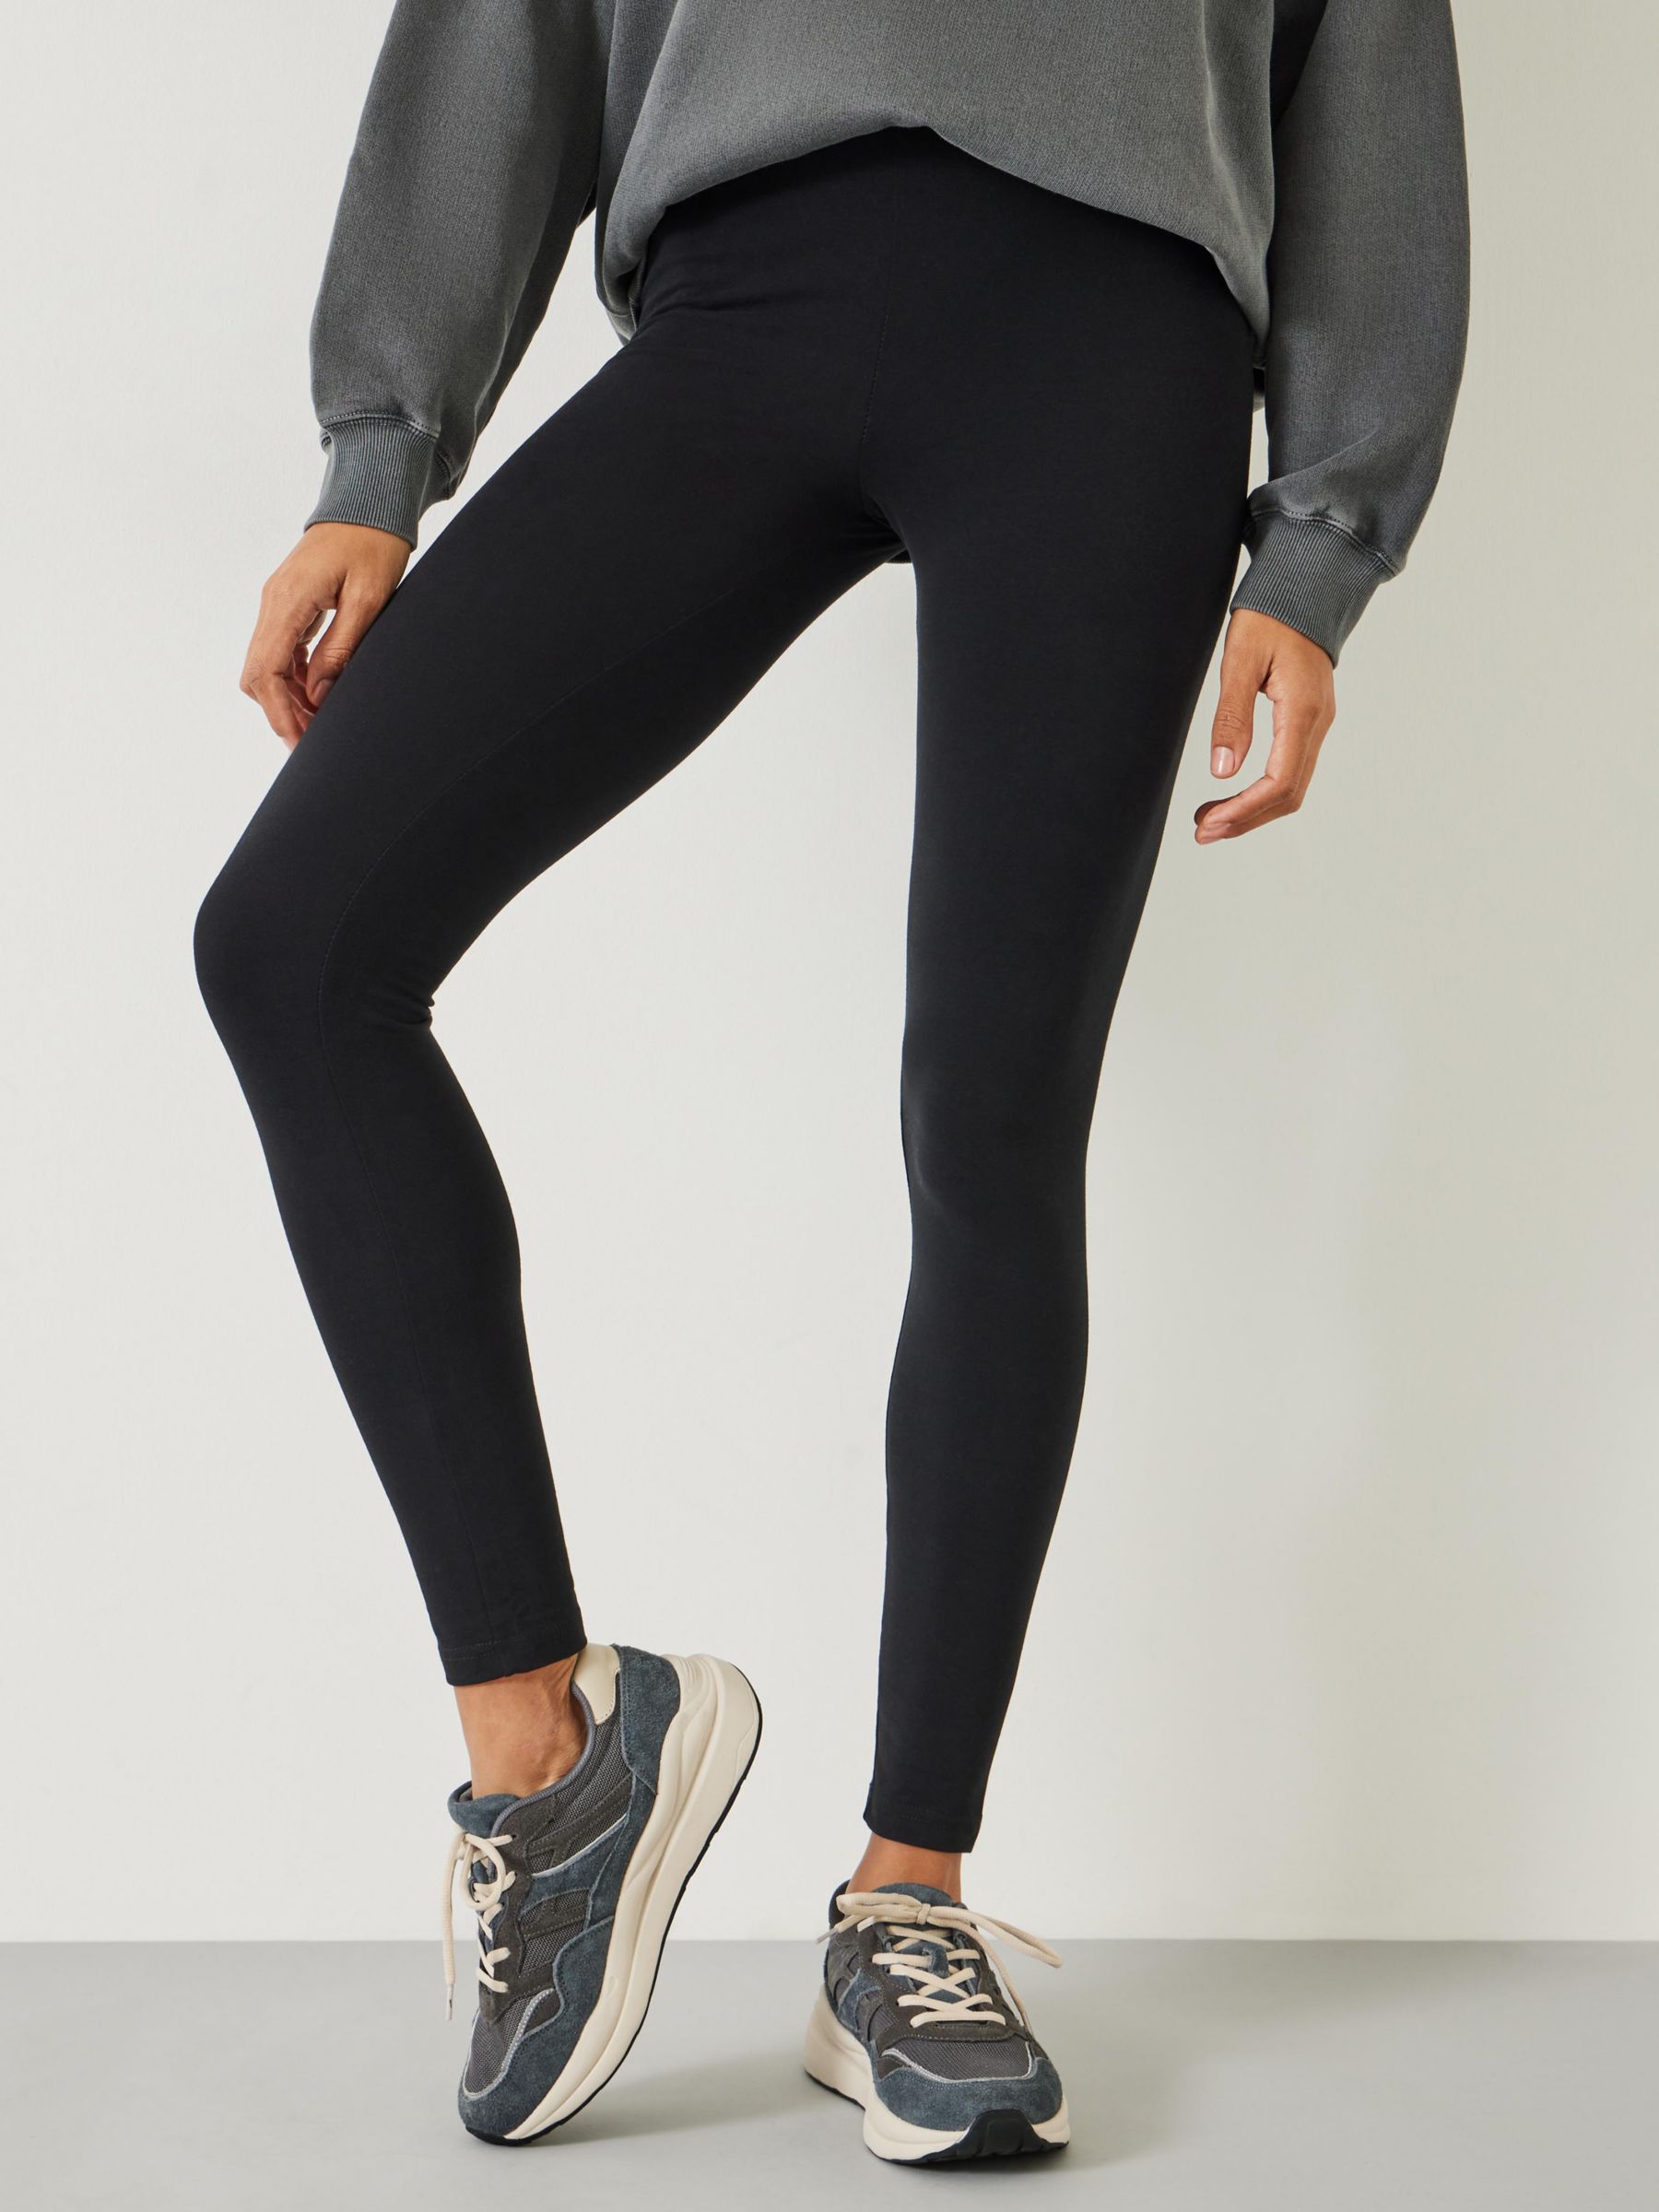 Women's Trousers & Leggings - Cotton Blend, Skinny